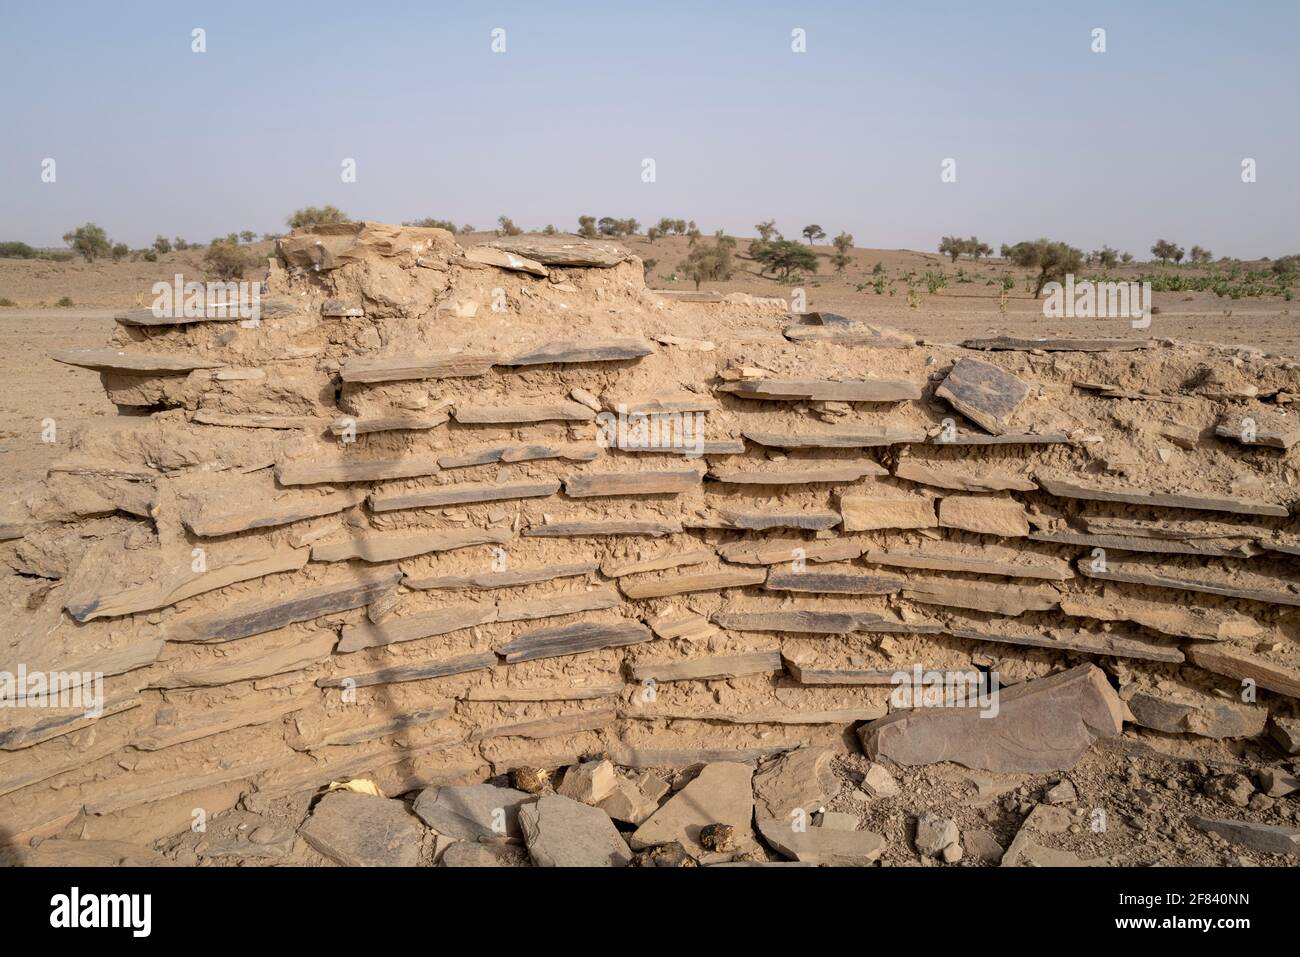 Archeological Remains of Kumbi Saleh, the last capital of the ancient kingdom of Ghana, Hodh Ech Chargui Region, Mauritania Stock Photo